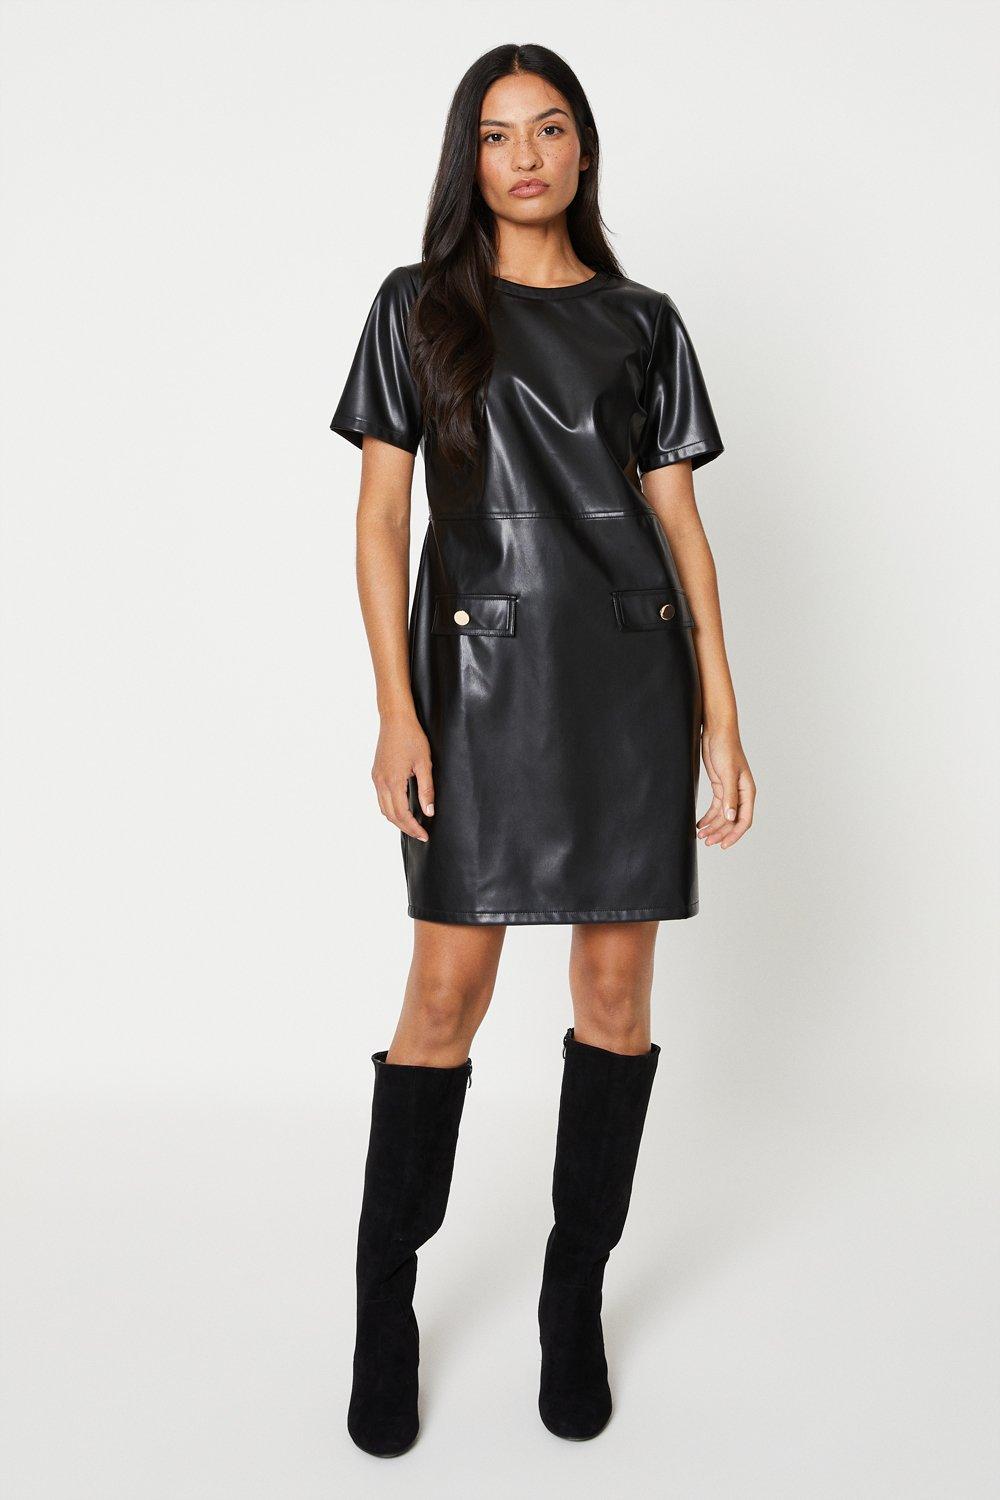 Women’s Short Sleeve Pocket Front Pu Dress - black - 8